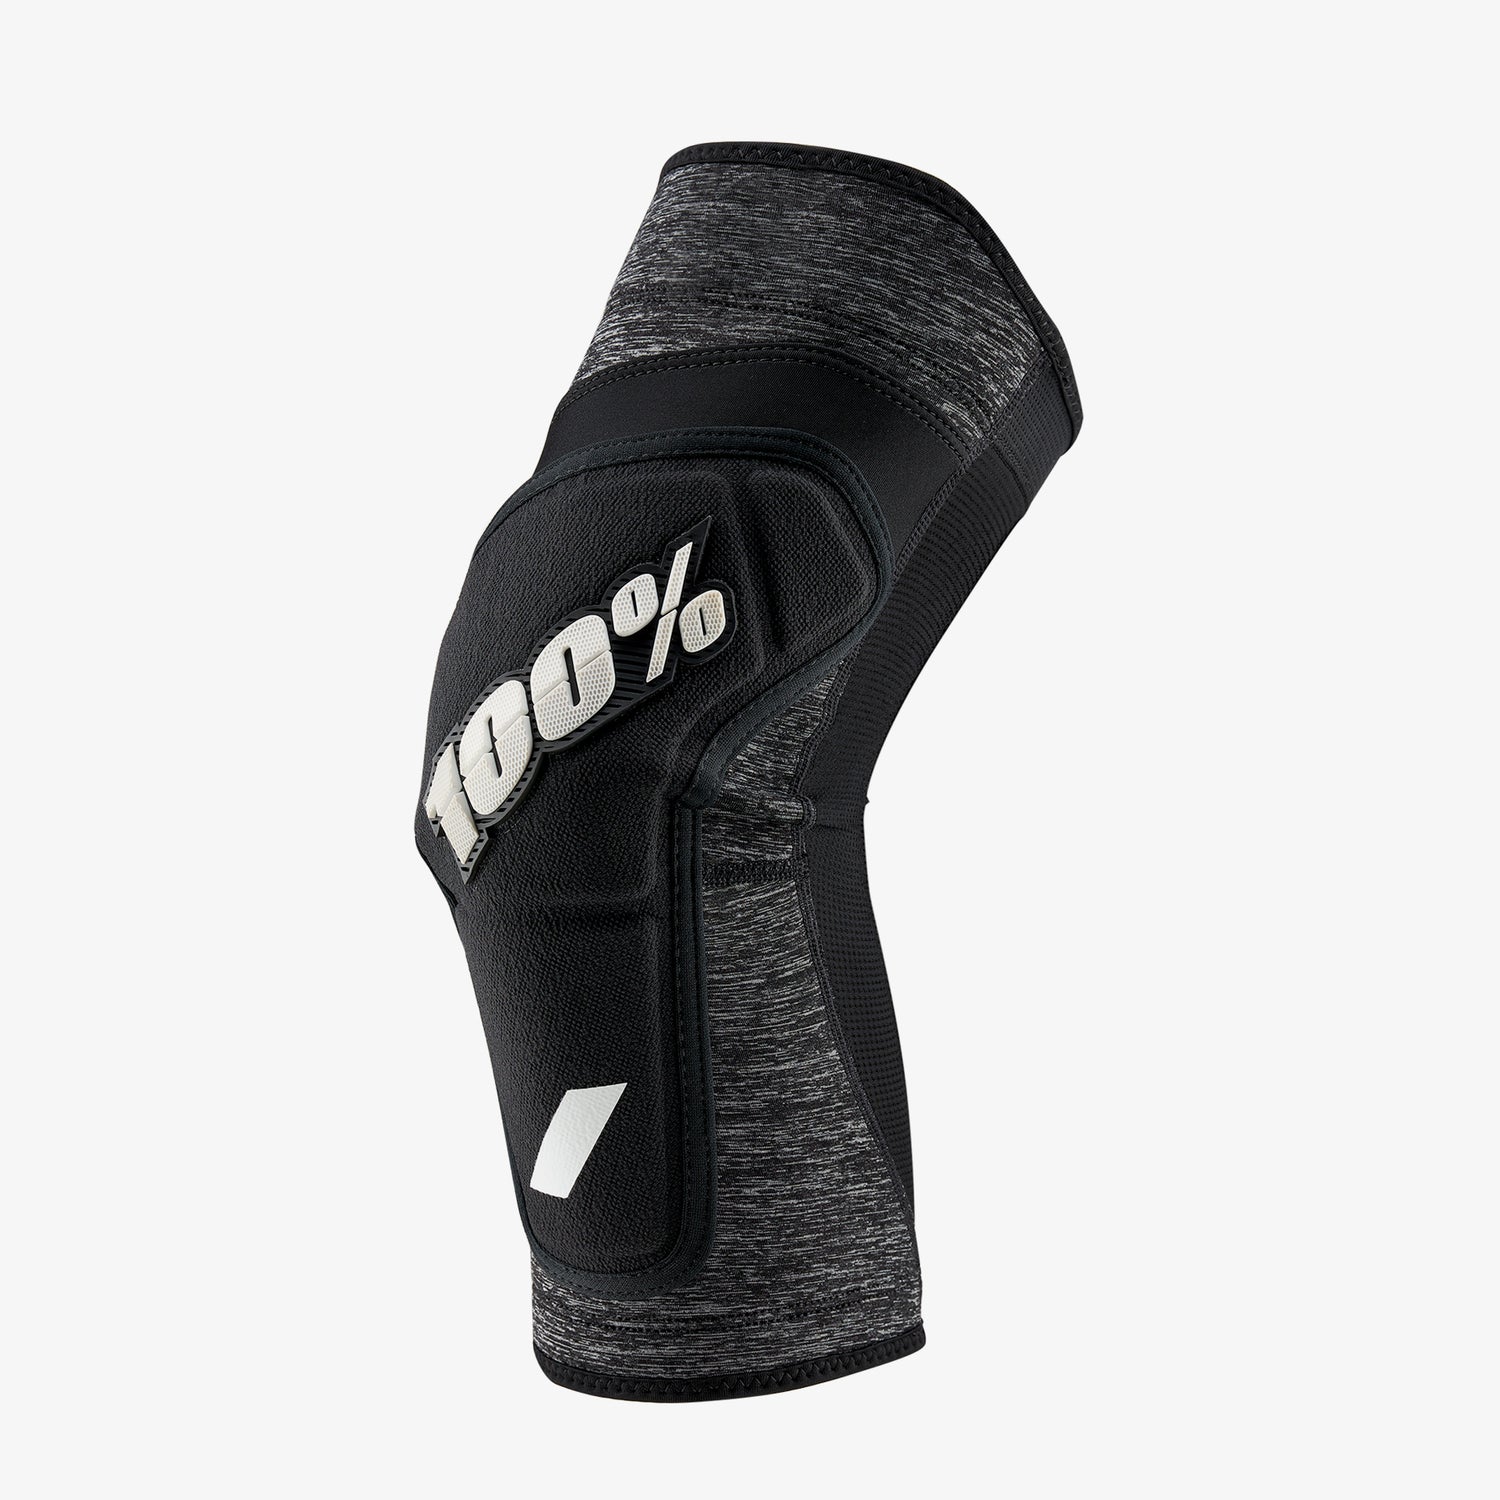 100% Knee Pad for biking, black and heathered grey